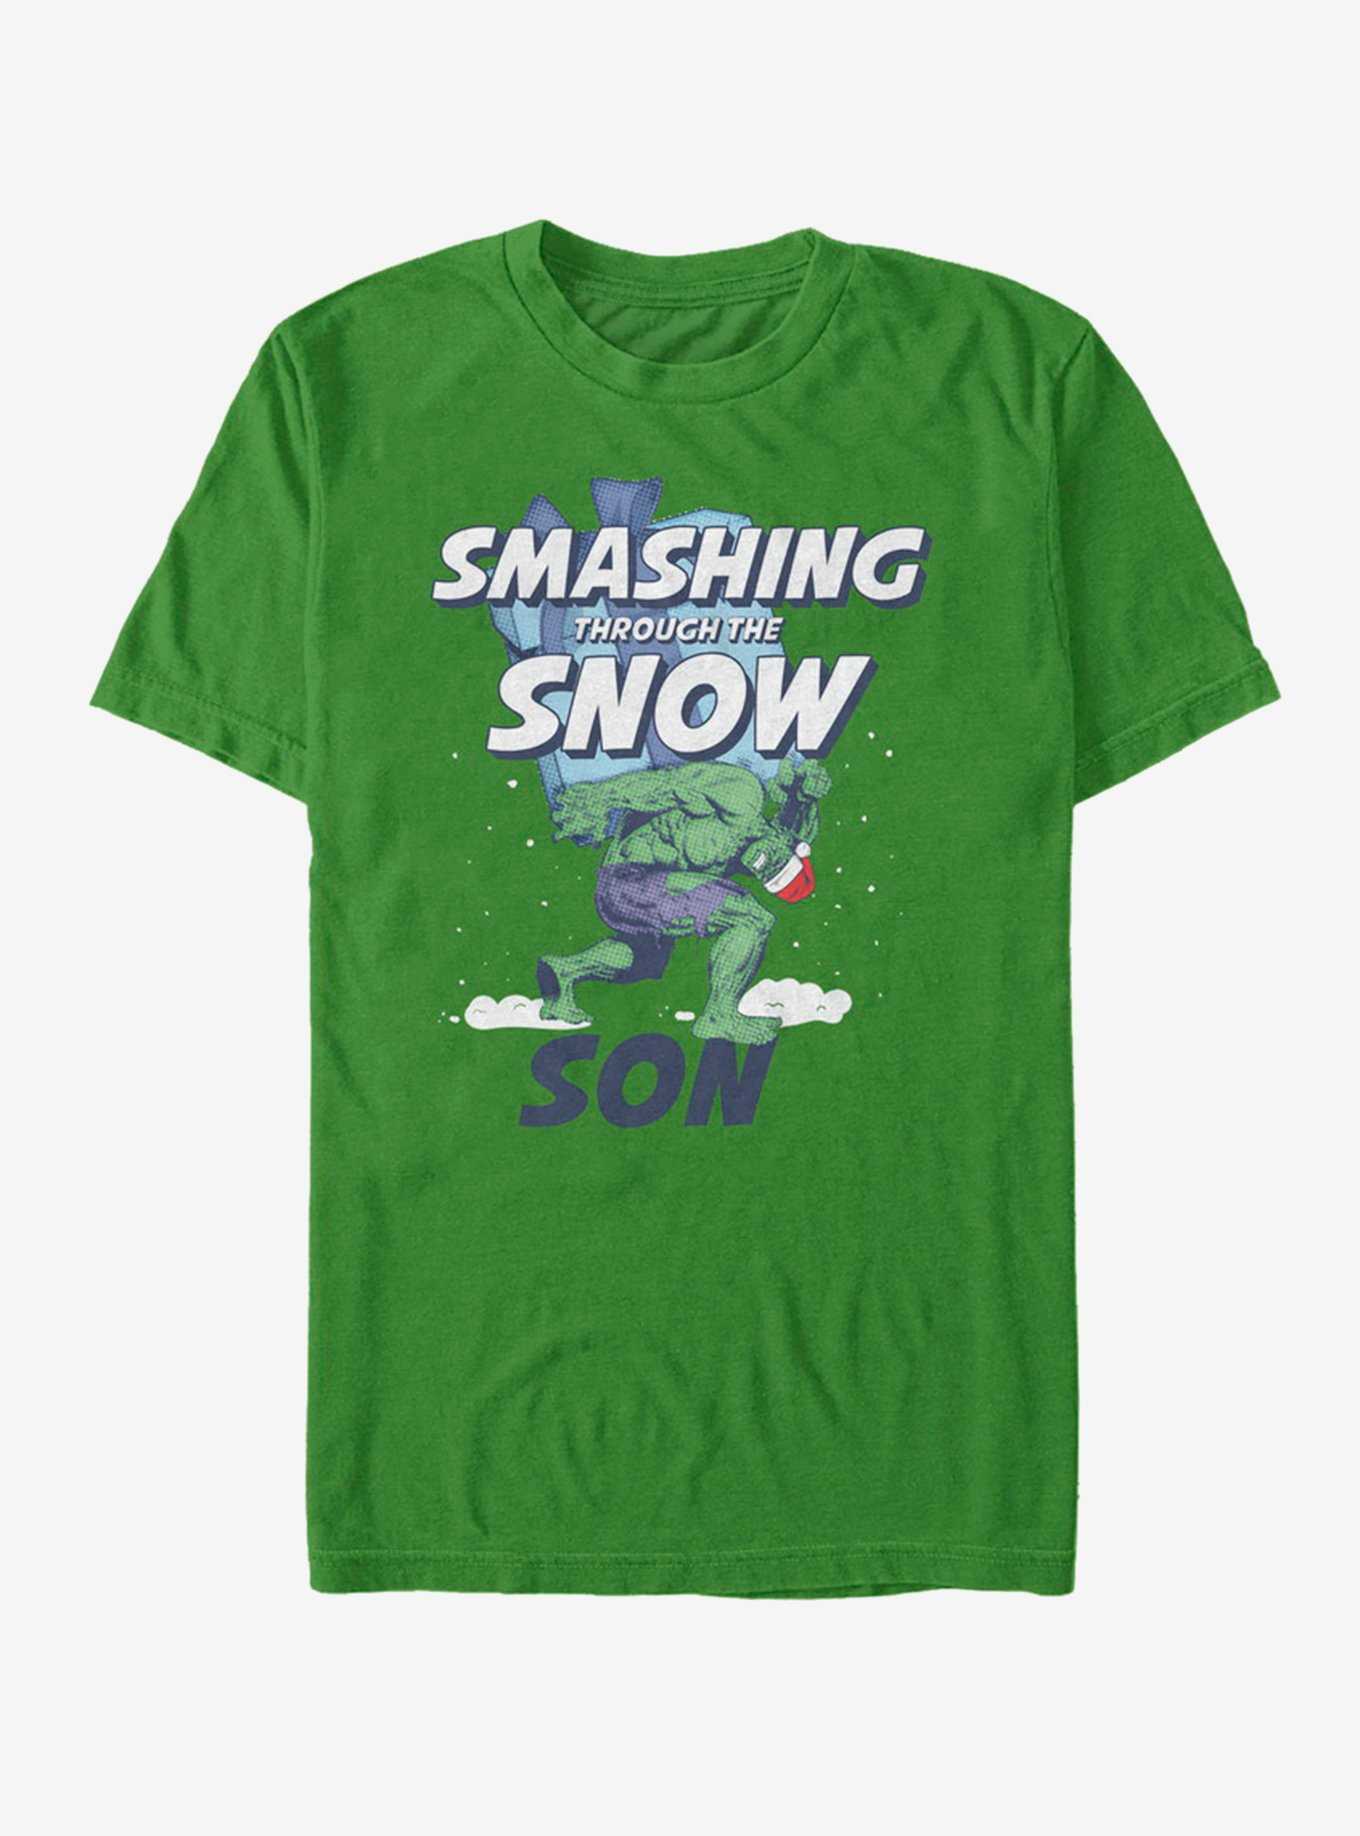 Marvel Hulk Smashing Snow Son T-Shirt, , hi-res